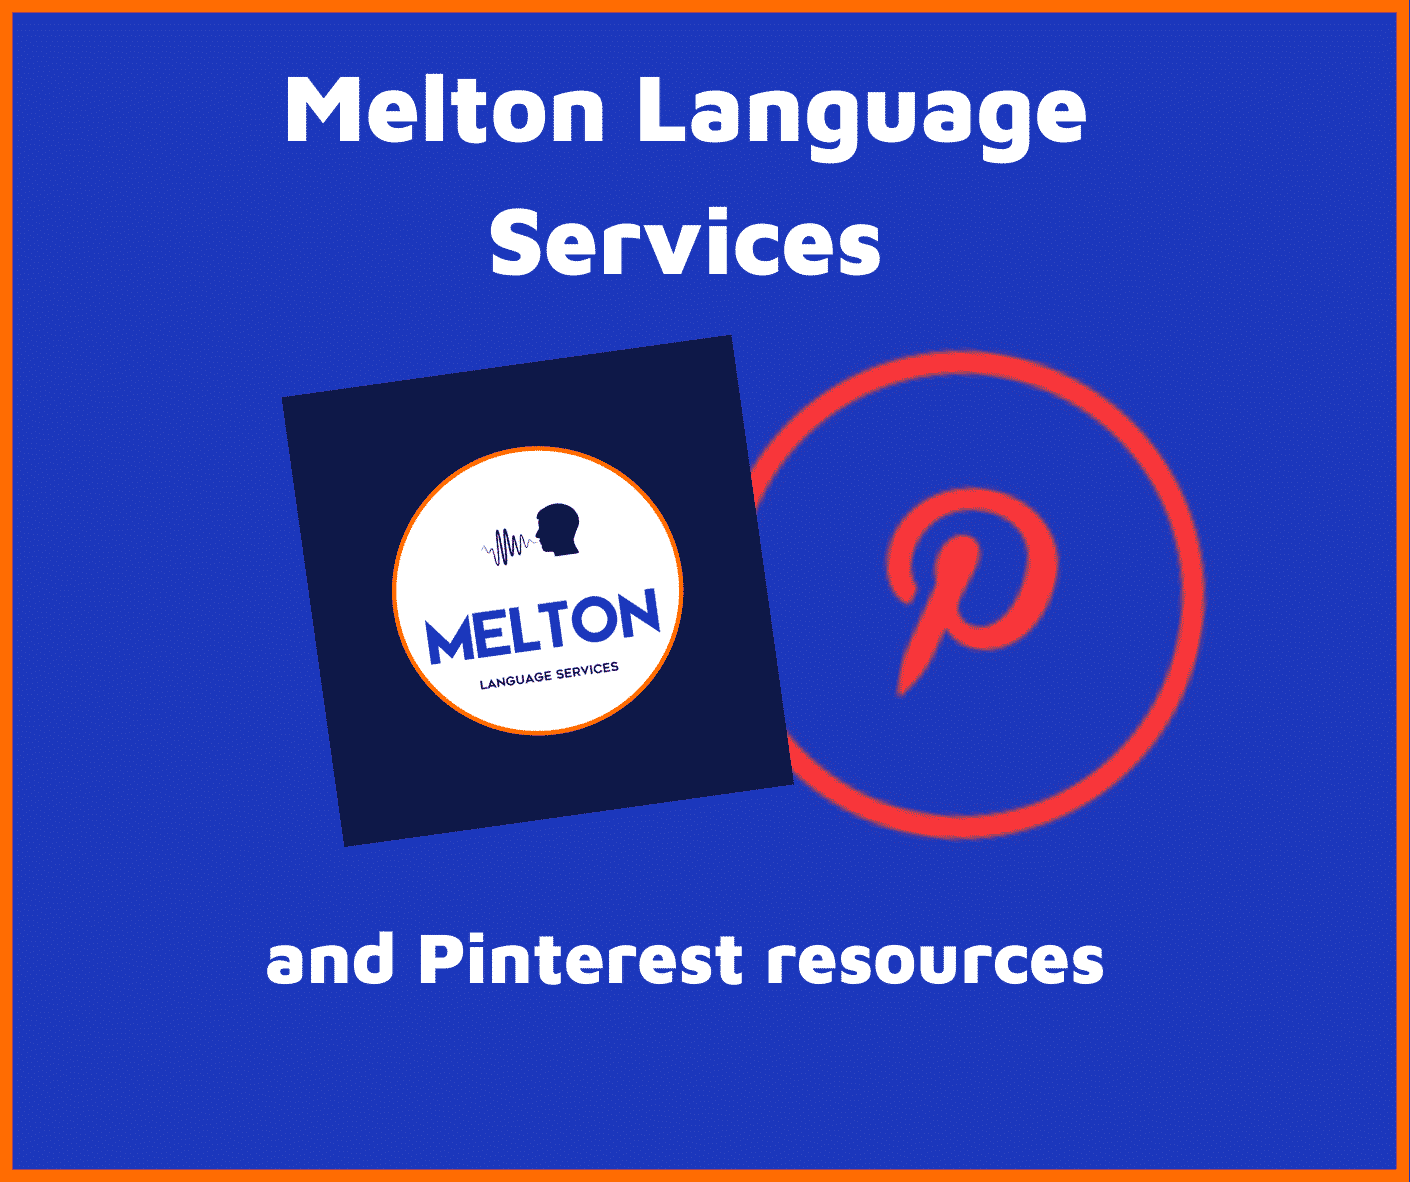 Contact Melton Language Services